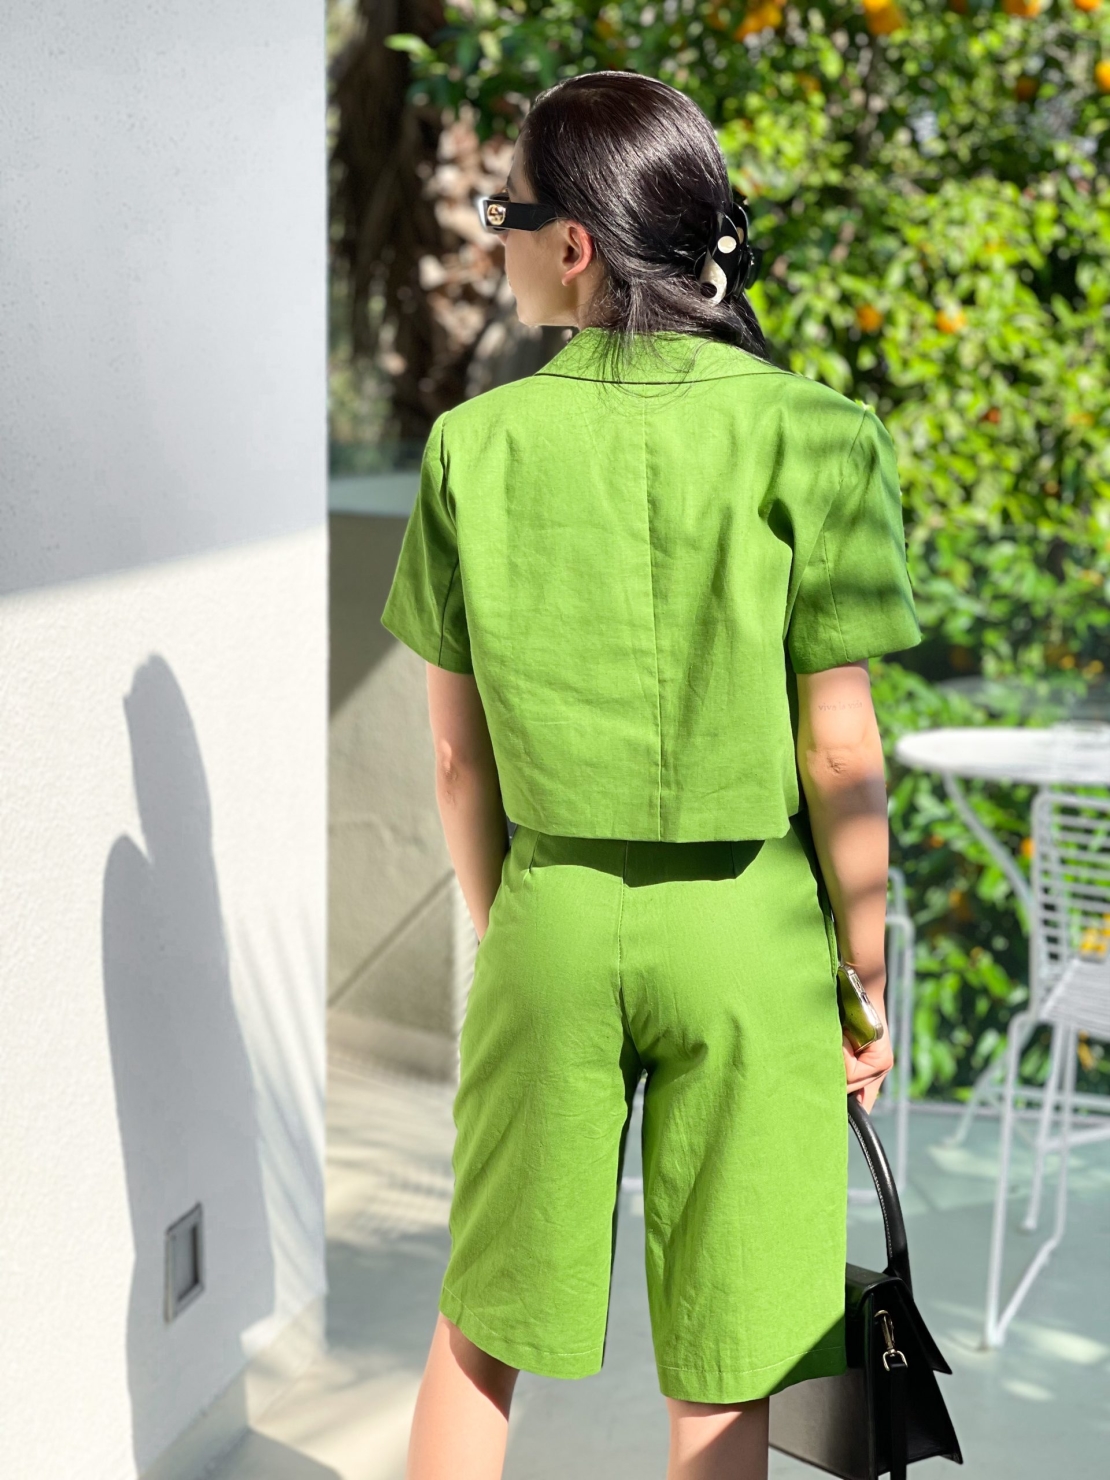 Pastel green shorts